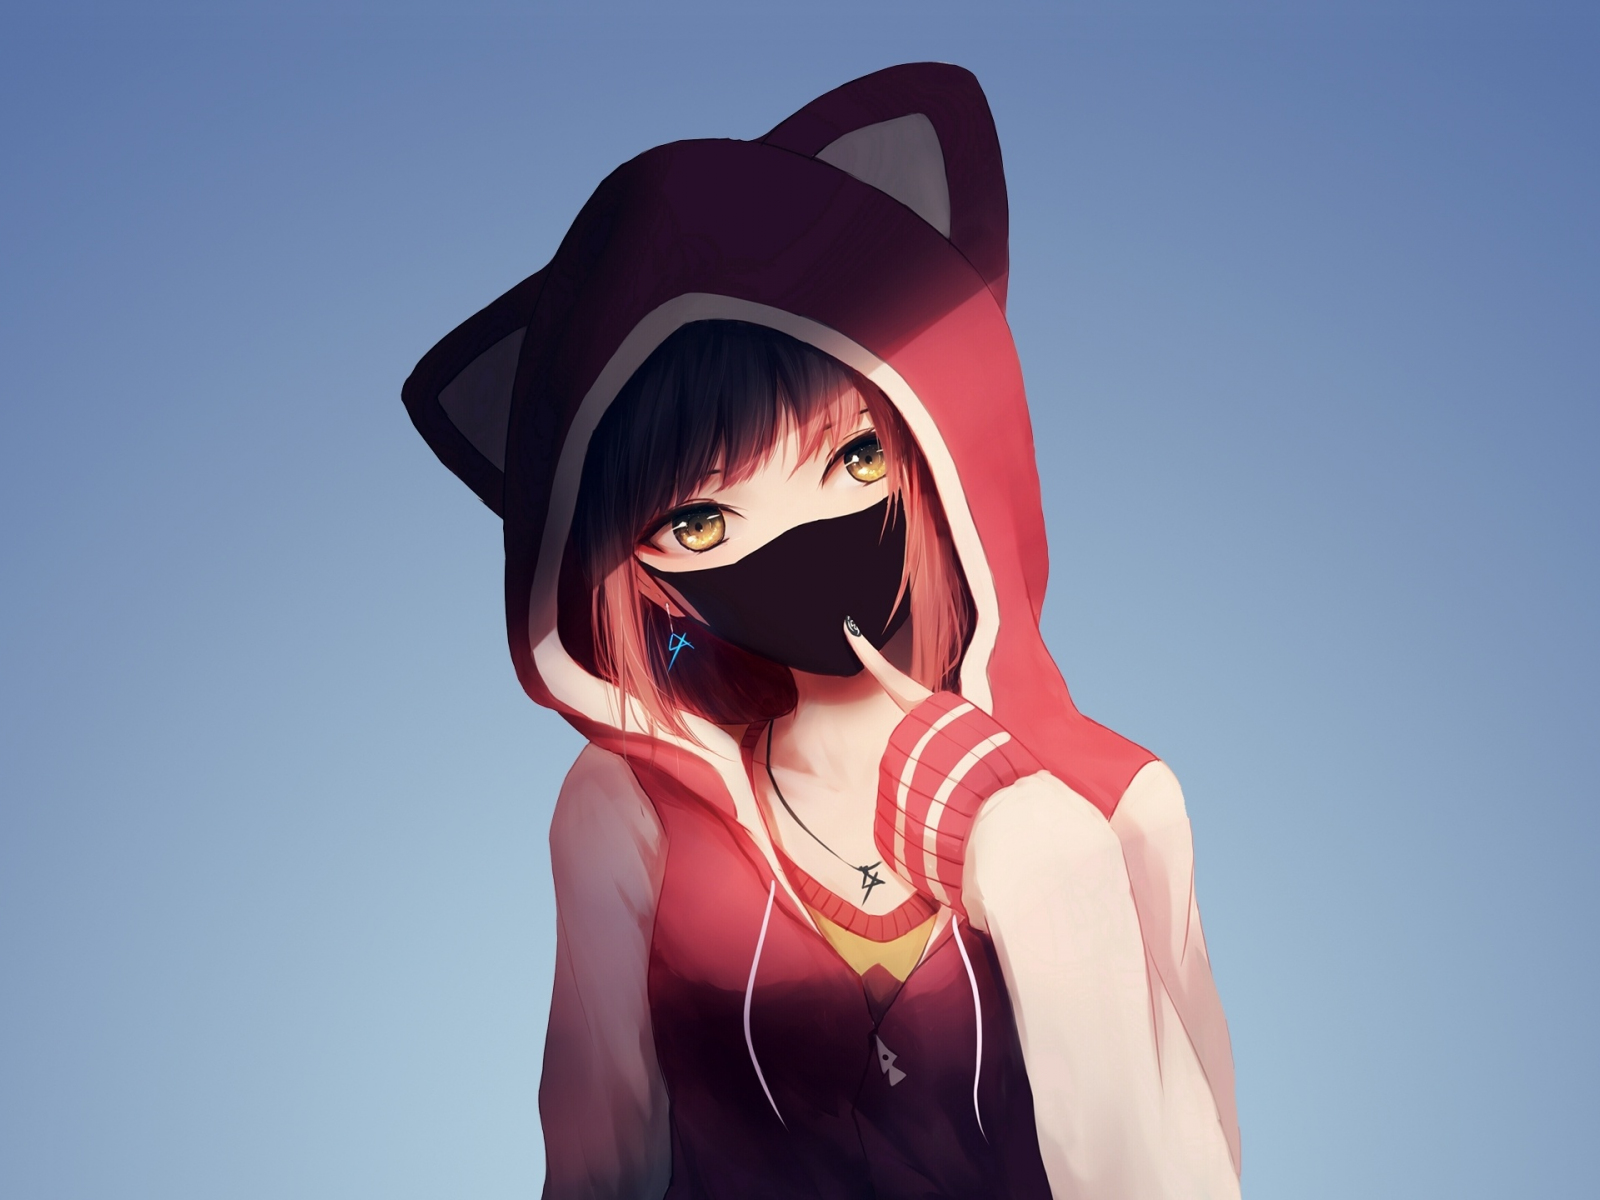 Download wallpaper x anime girl in hoodie mask original standard fullscreen x hd background